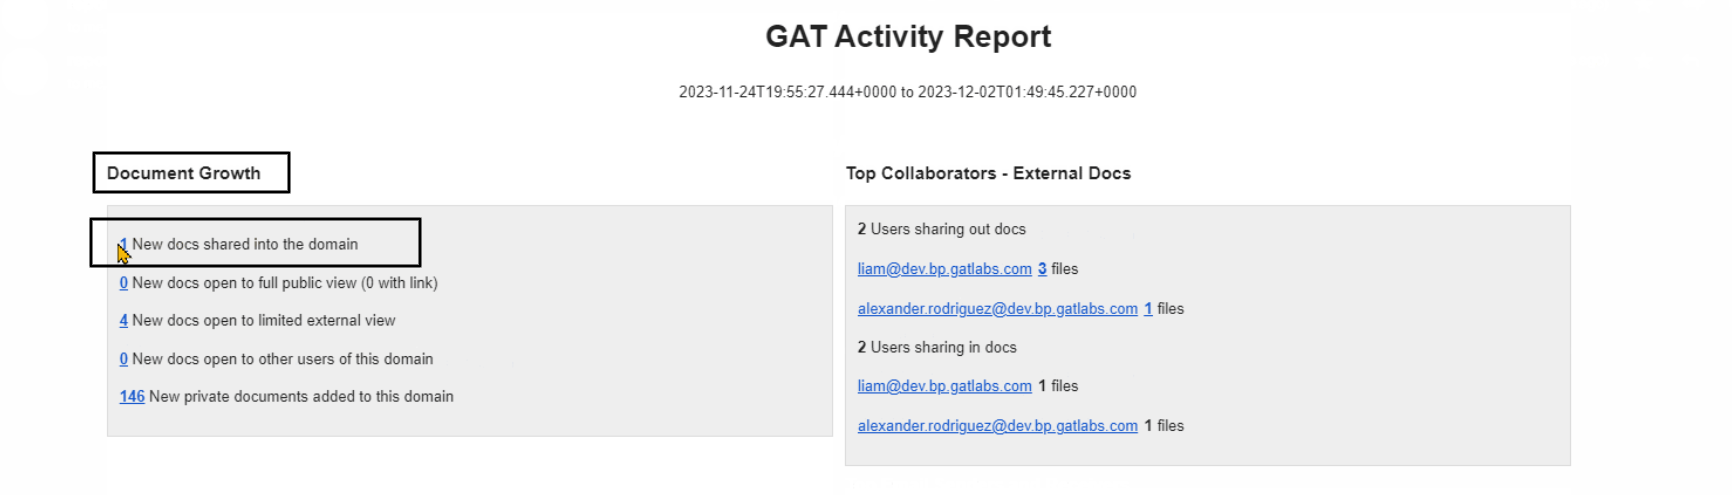 GAT Activity Report 